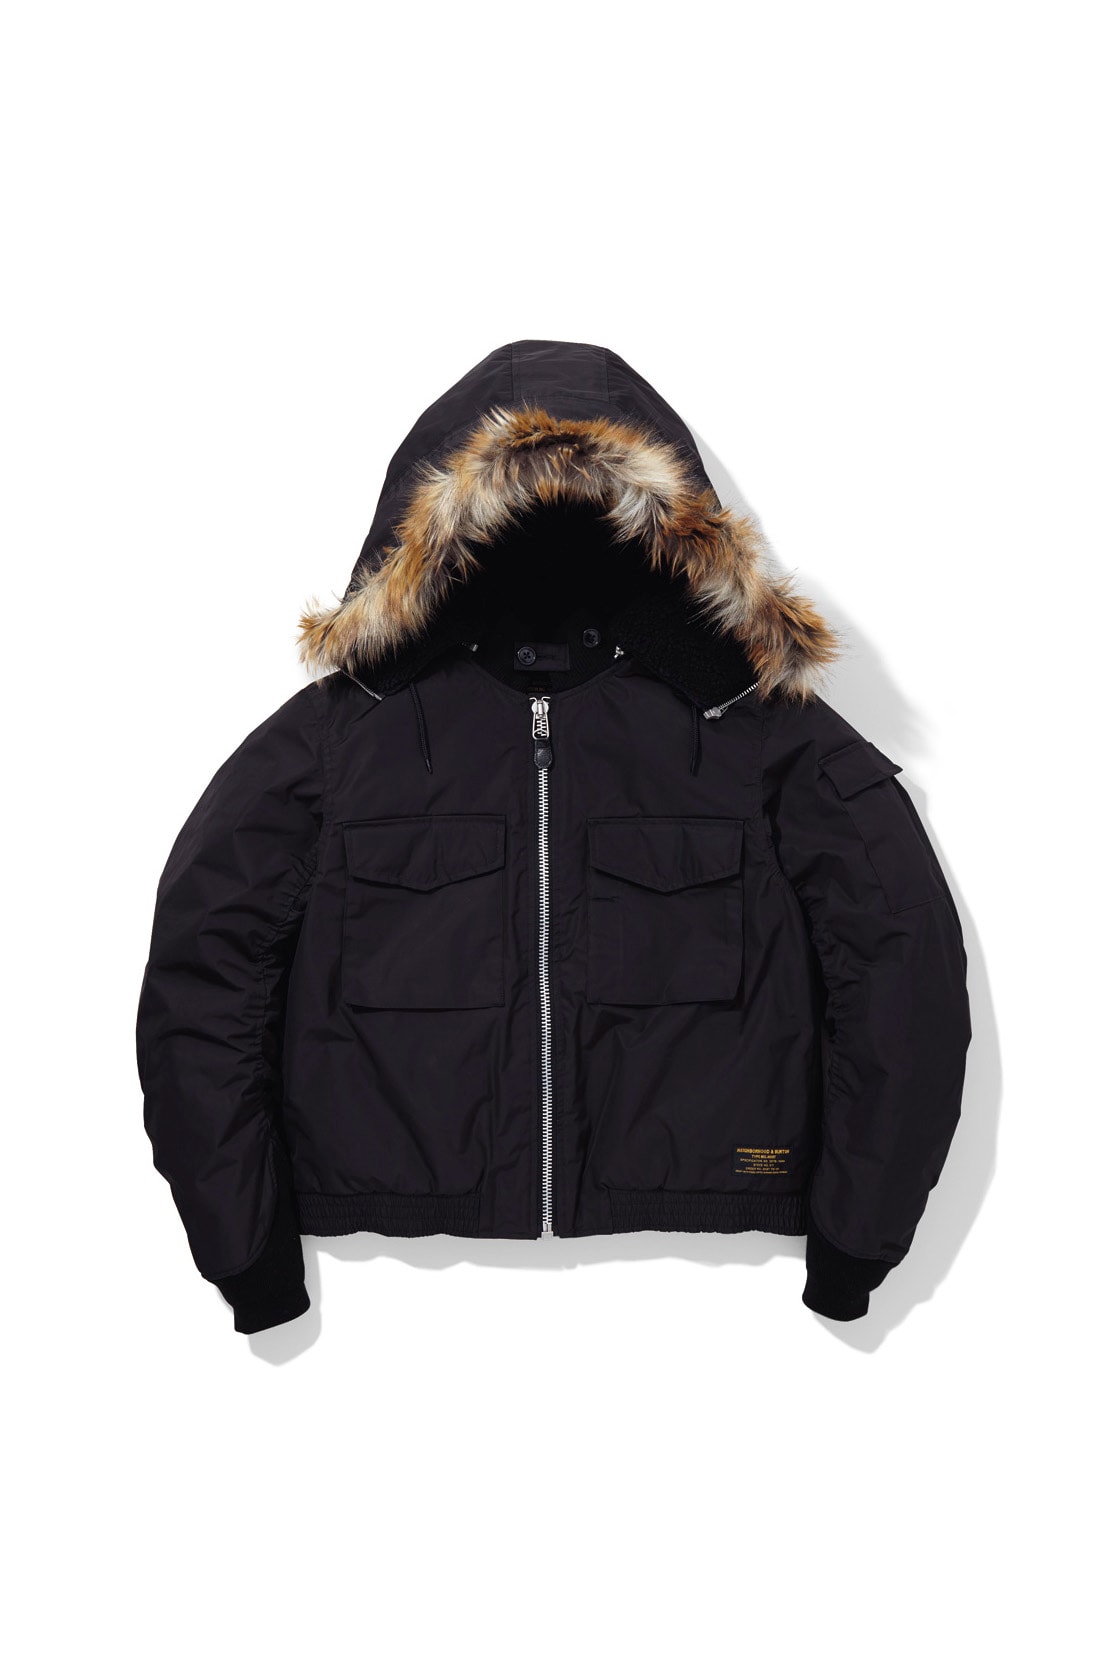 NEIGHBORHOOD x Burton Release Winter 2017 Jackets Snowboard Snowboarding Slopes Shred Outerwear Cold weather streetwear